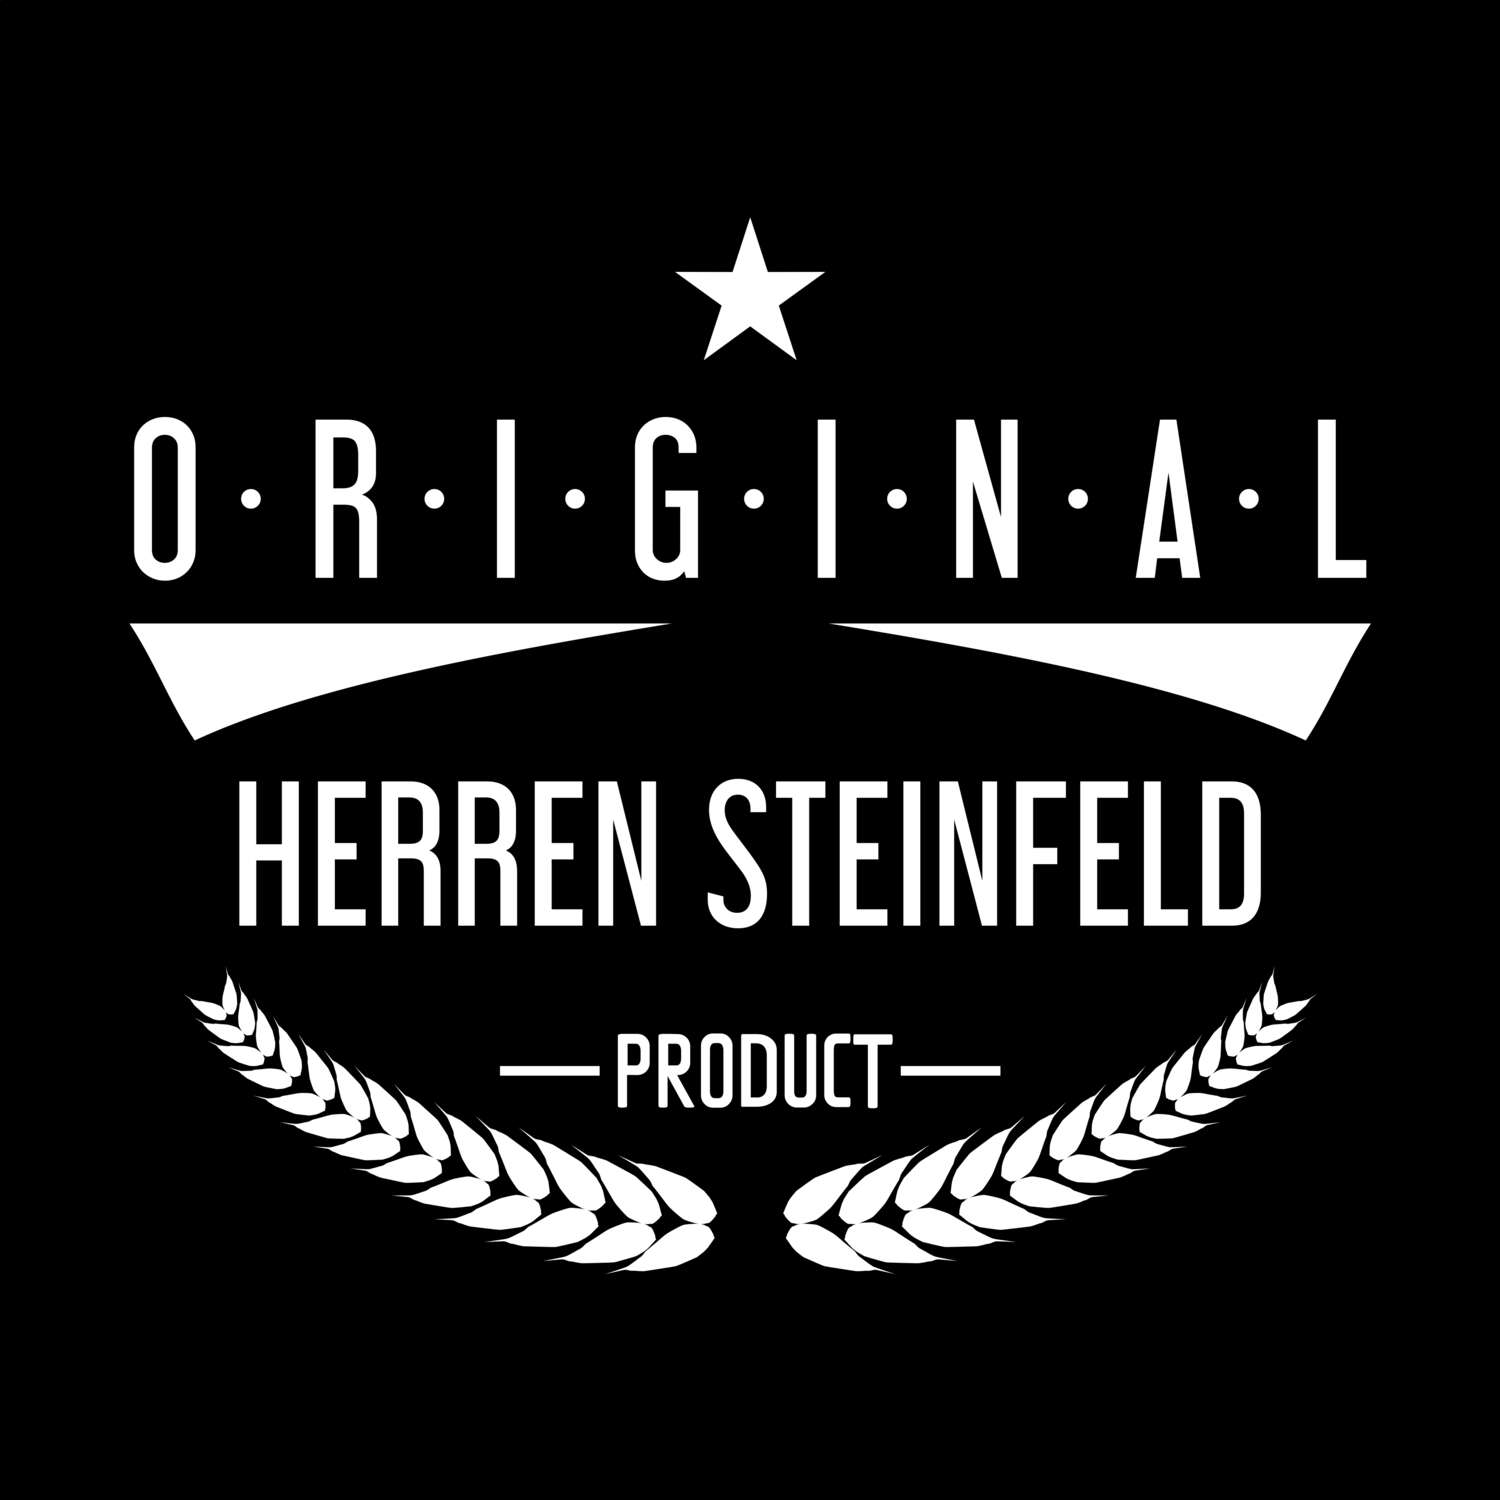 Herren Steinfeld T-Shirt »Original Product«